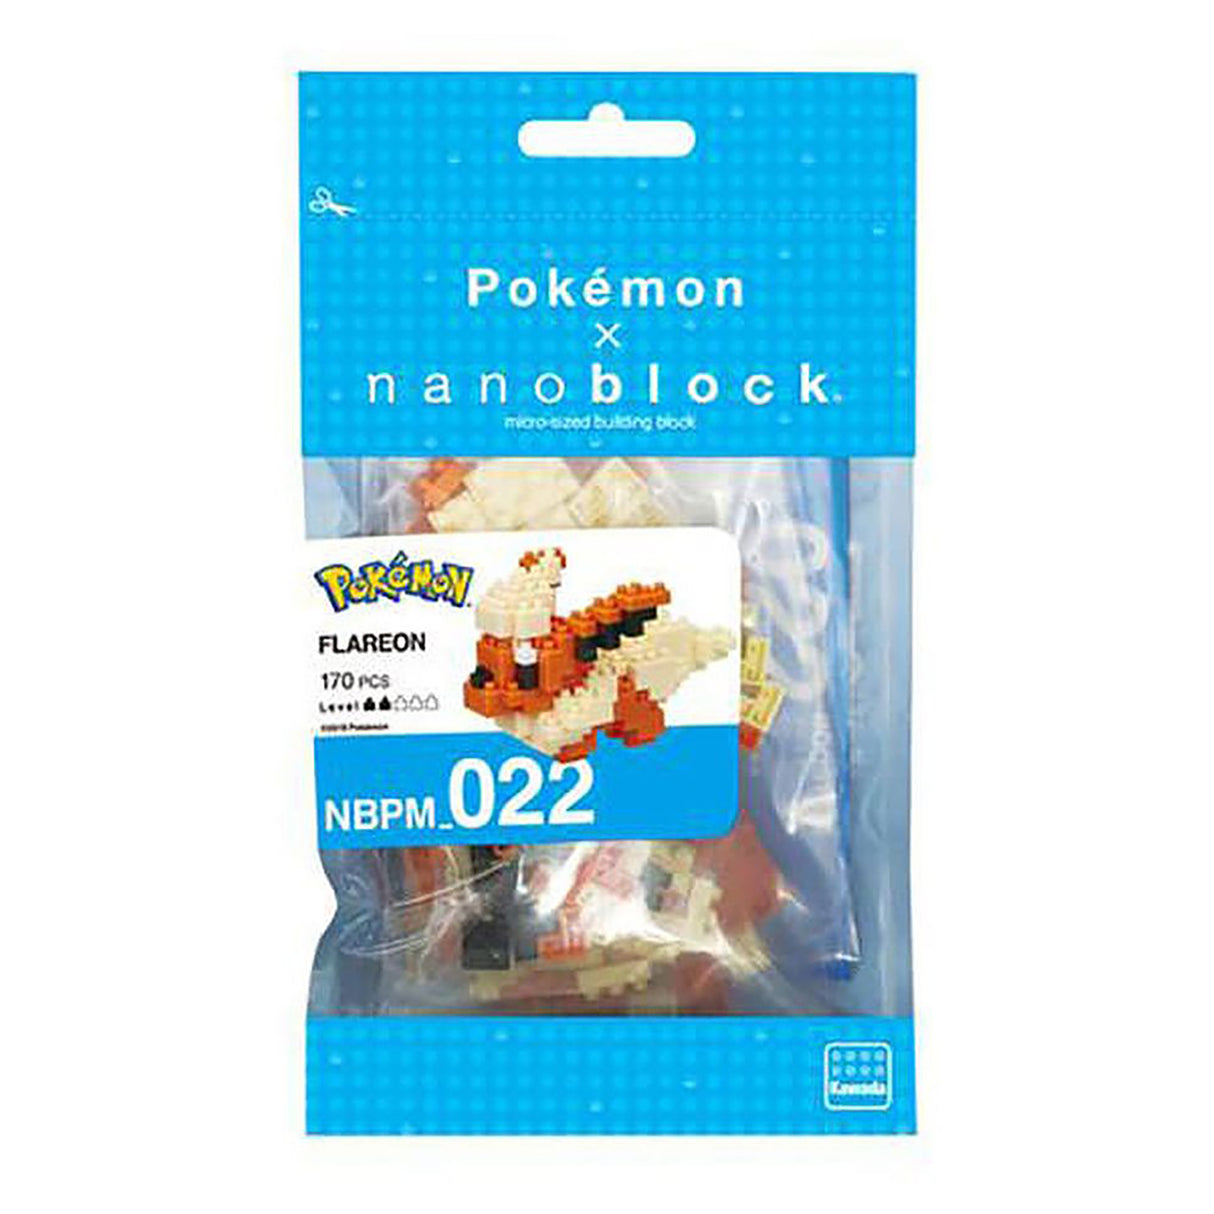 nanoblock Pokemon - Flareon (170 pieces)